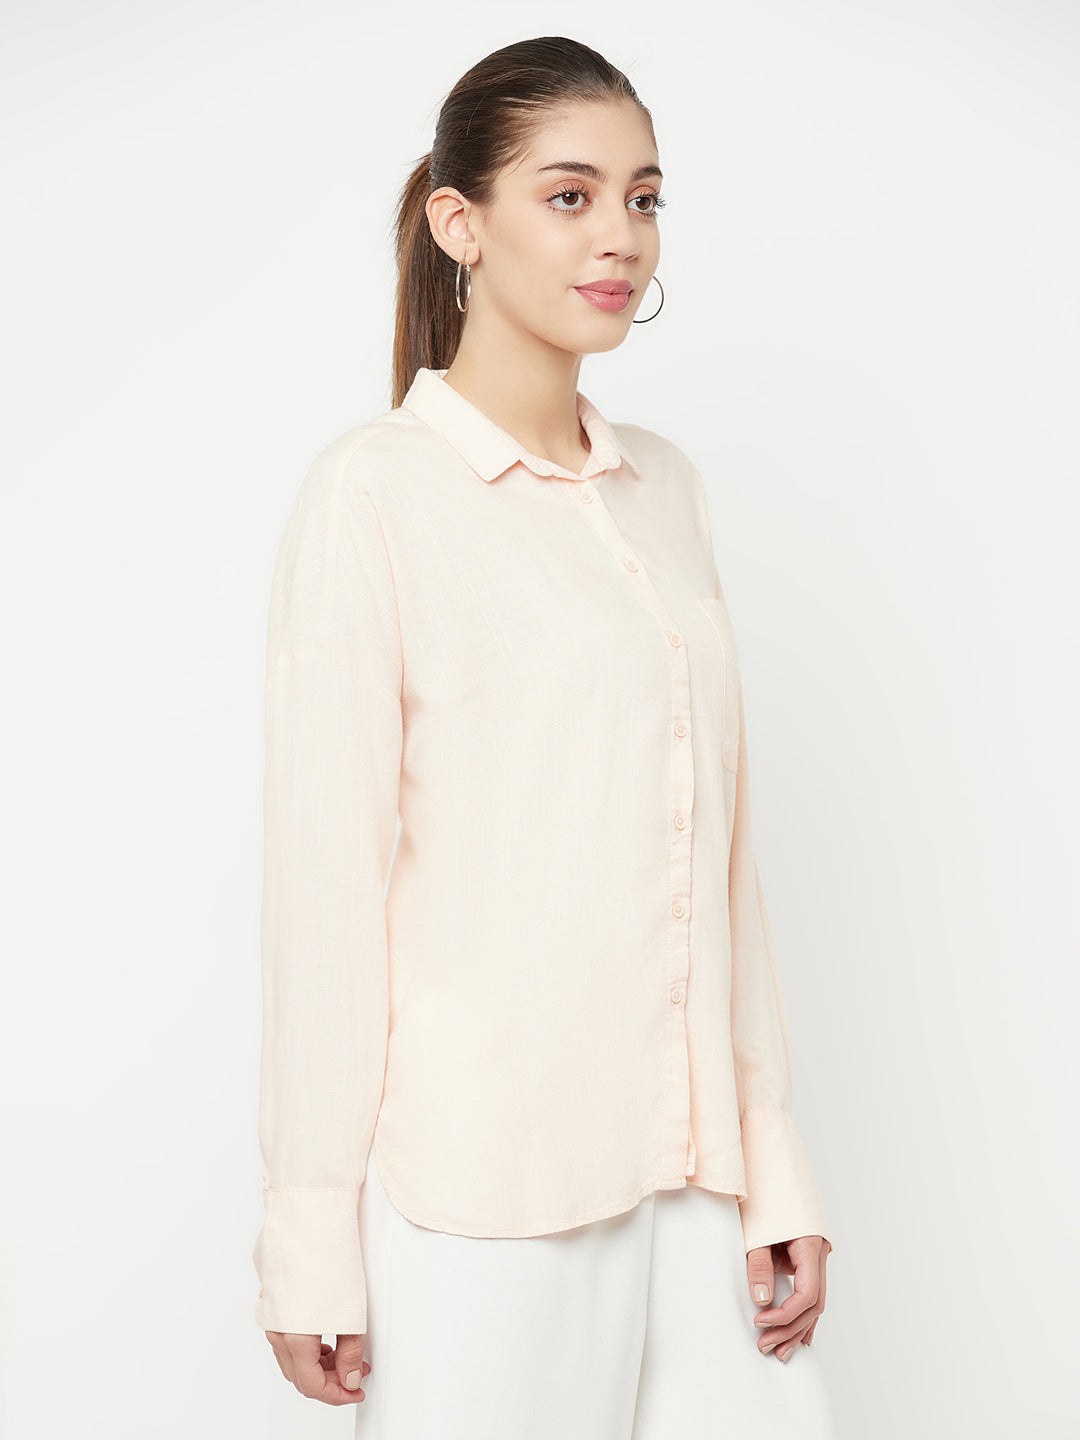 Peach Long Sleeves Shirt - Women Shirts